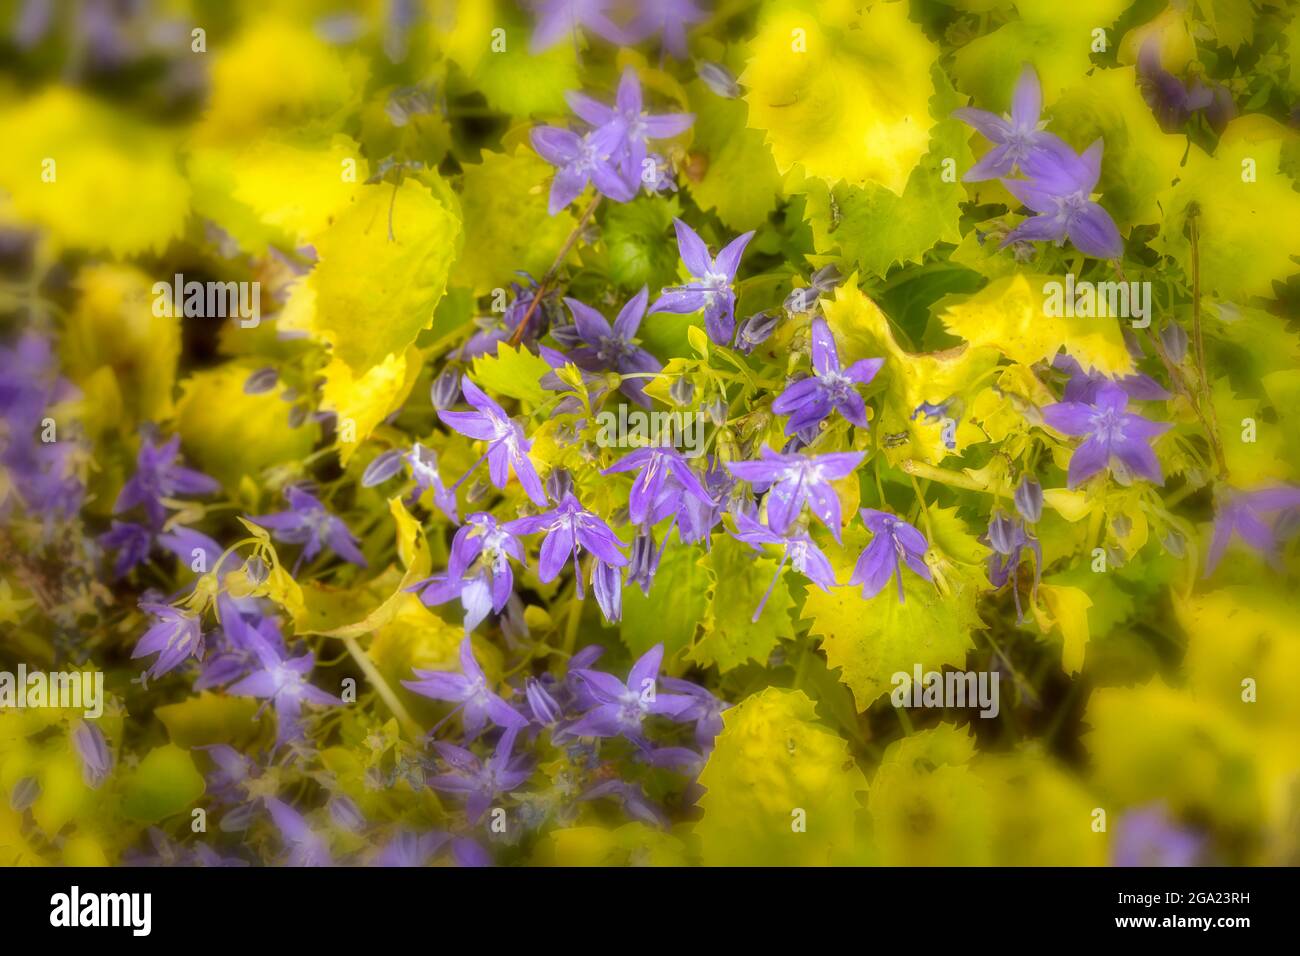 Prolific Campanula Garganica ‘Dickson’s Gold’ in full flower, close-up plant portrait Stock Photo